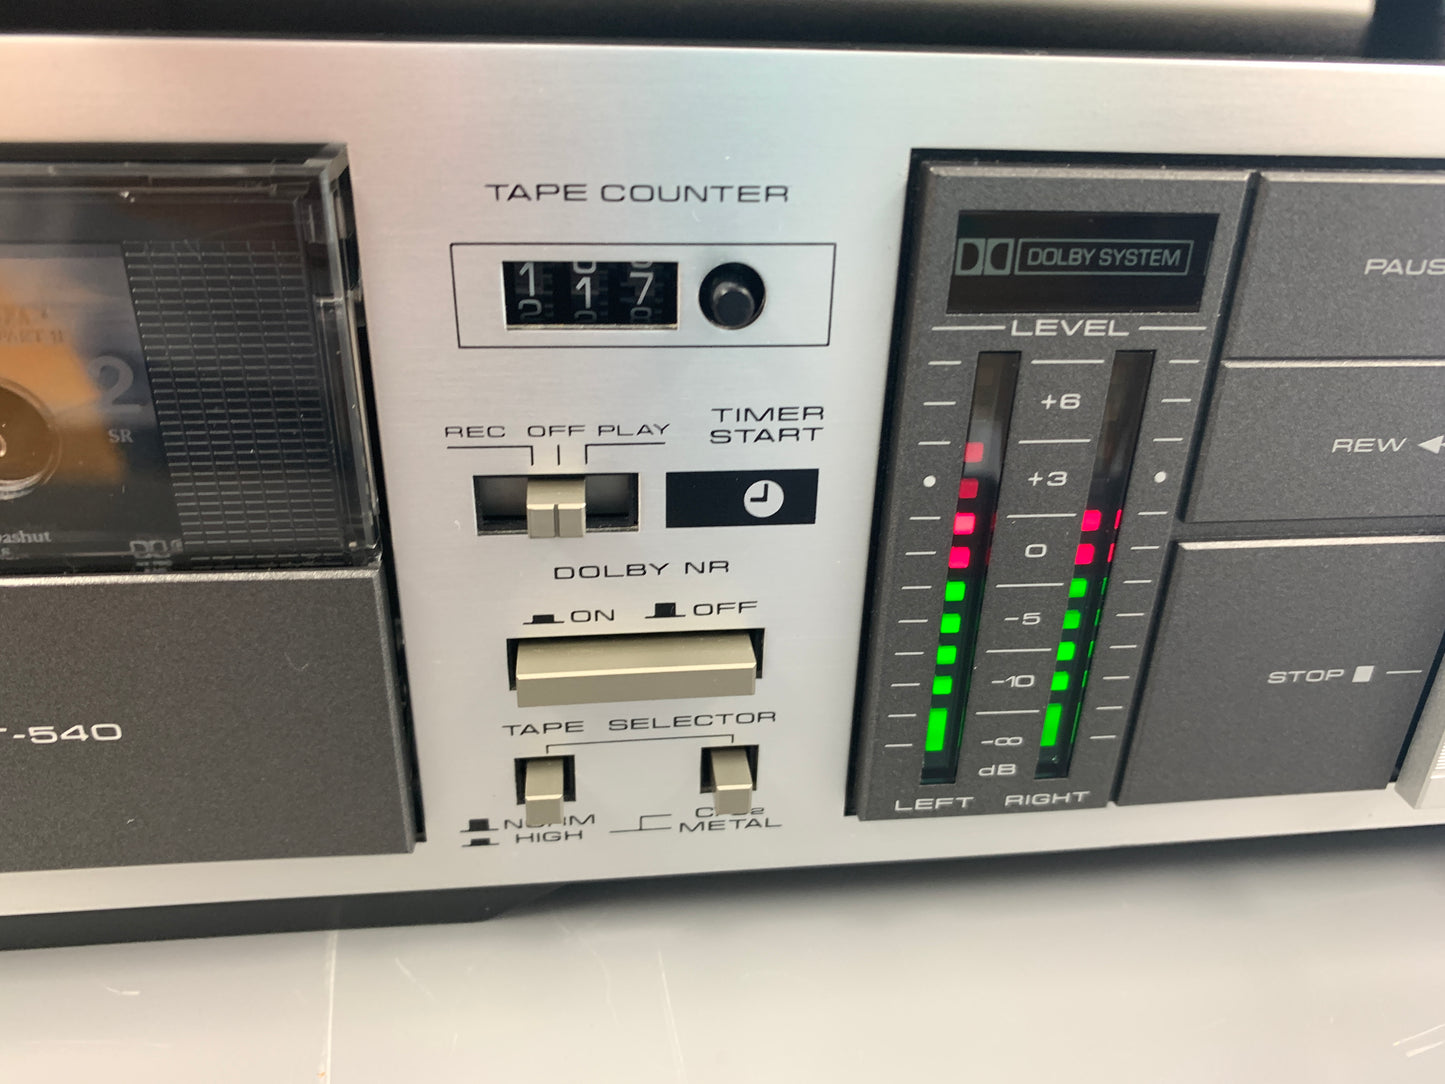 Pioneer Set * SA-740 Integrated Amplifier * TX-540 Tuner * CT-540 Cassette Deck